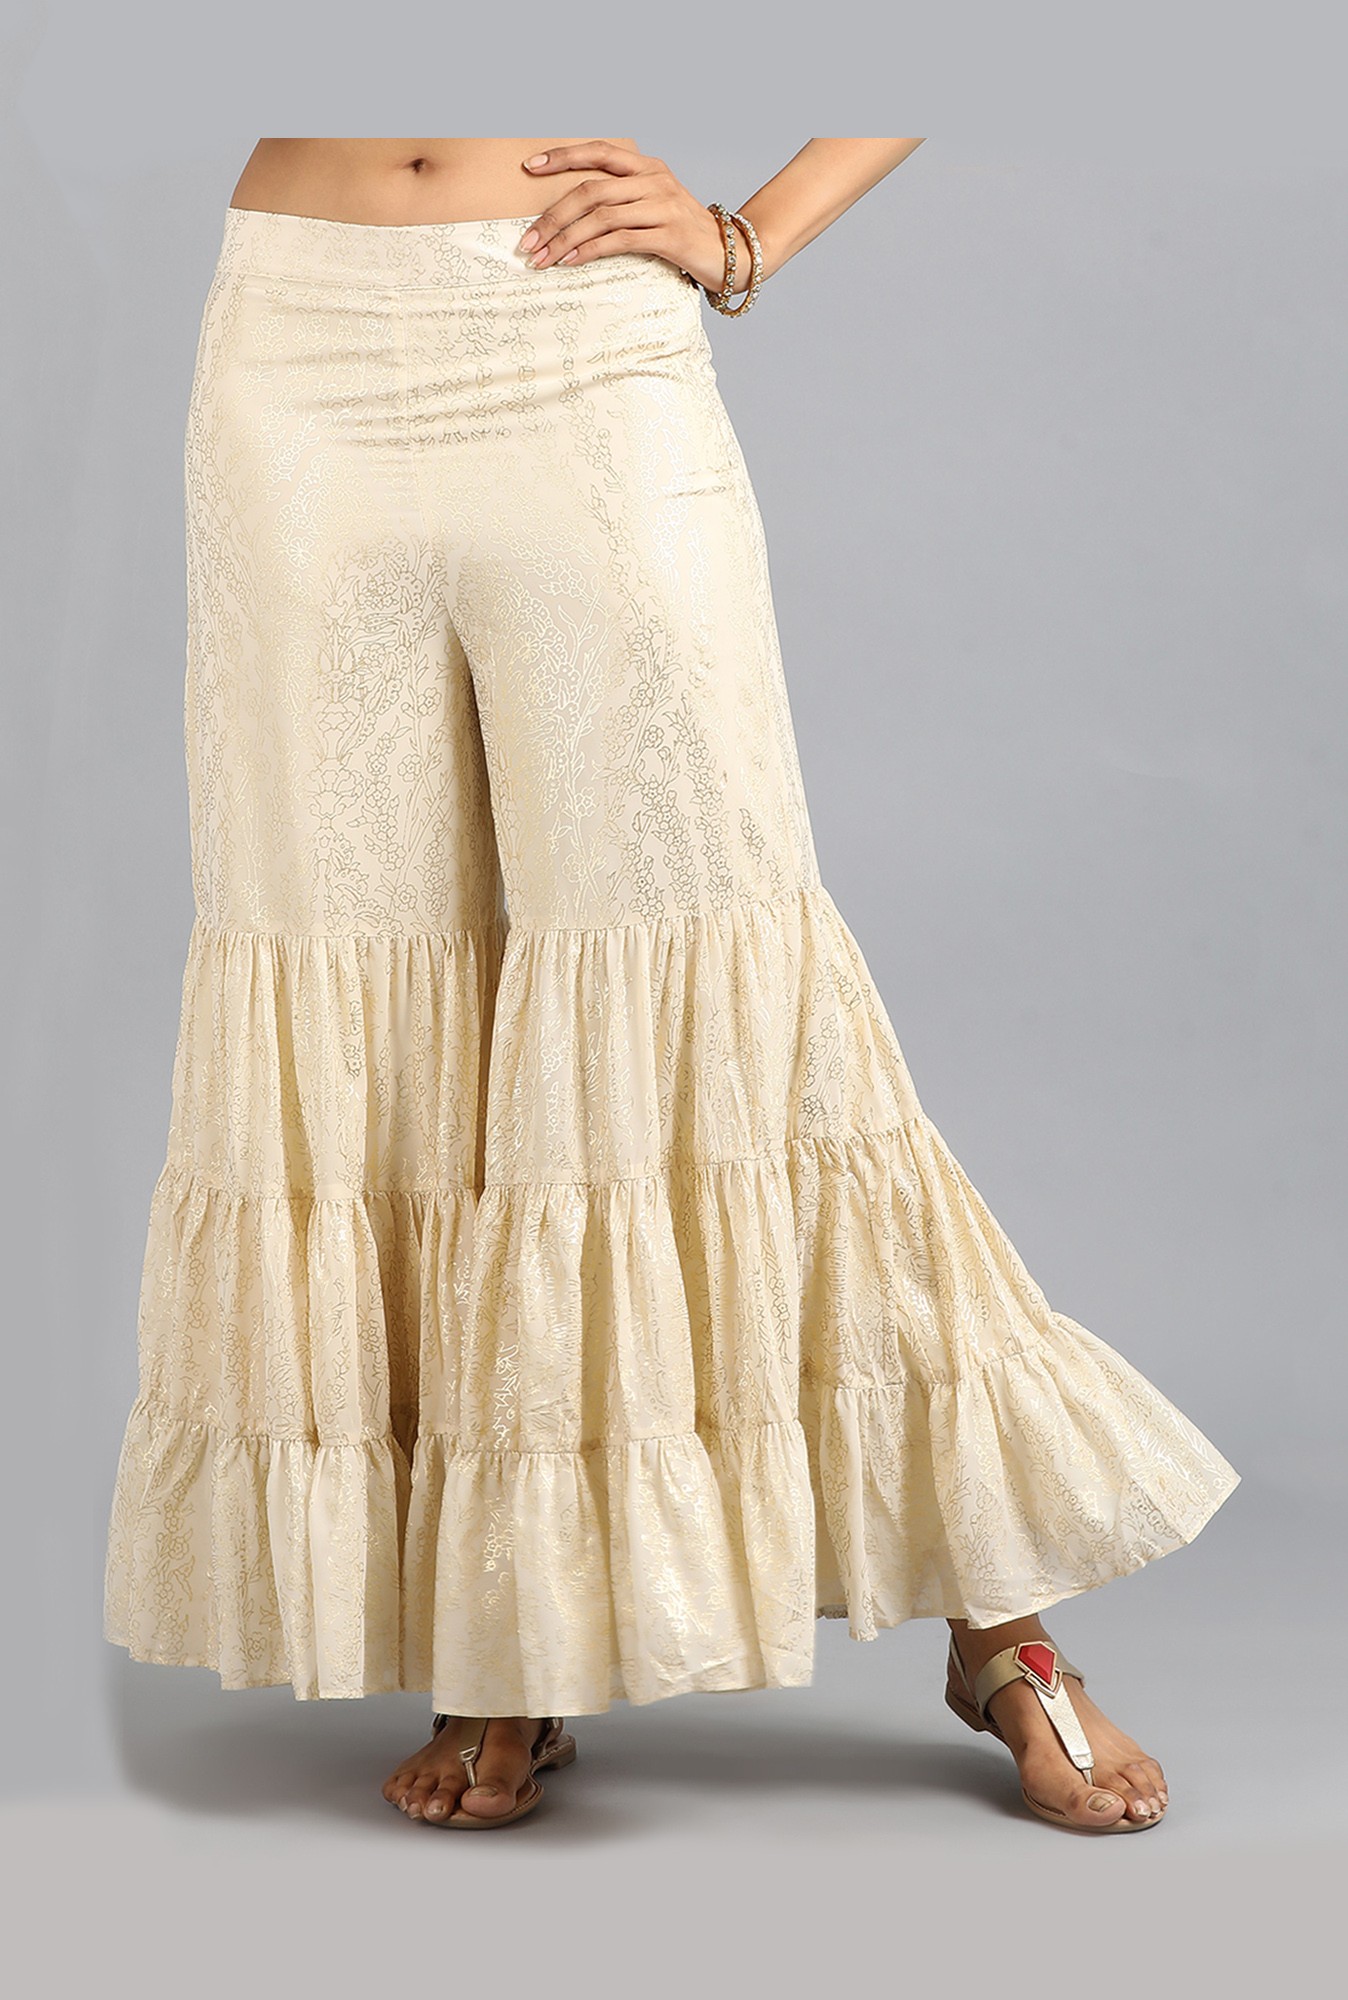 PAKISTANI WHITE GOLD Heavy Bridal Maxi Dress Long Gown, Dupatta, Sharara  Pants M $200.00 - PicClick